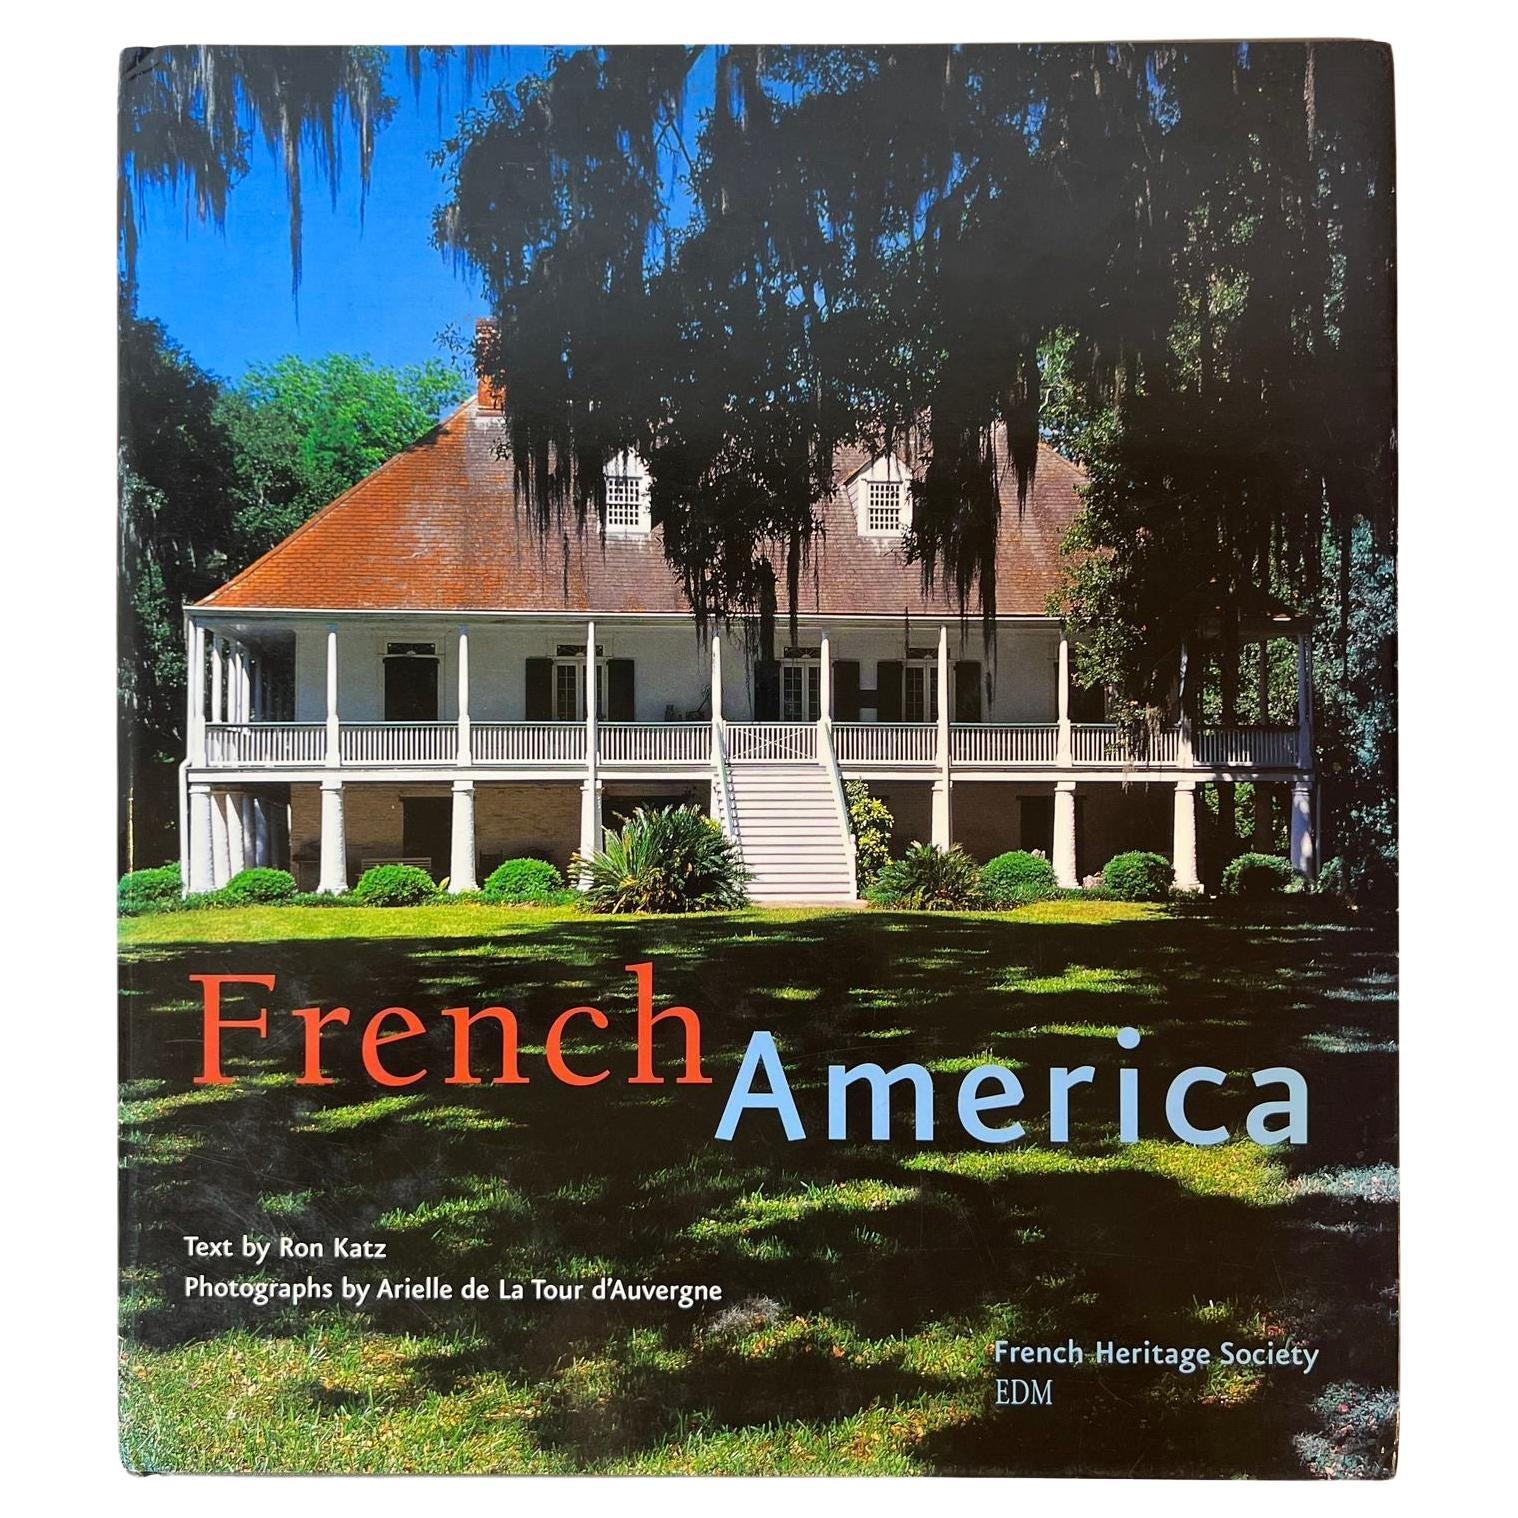 French America By Arielle De La Tour D'Auvergne and Ron Katz 2005 Hardcover For Sale